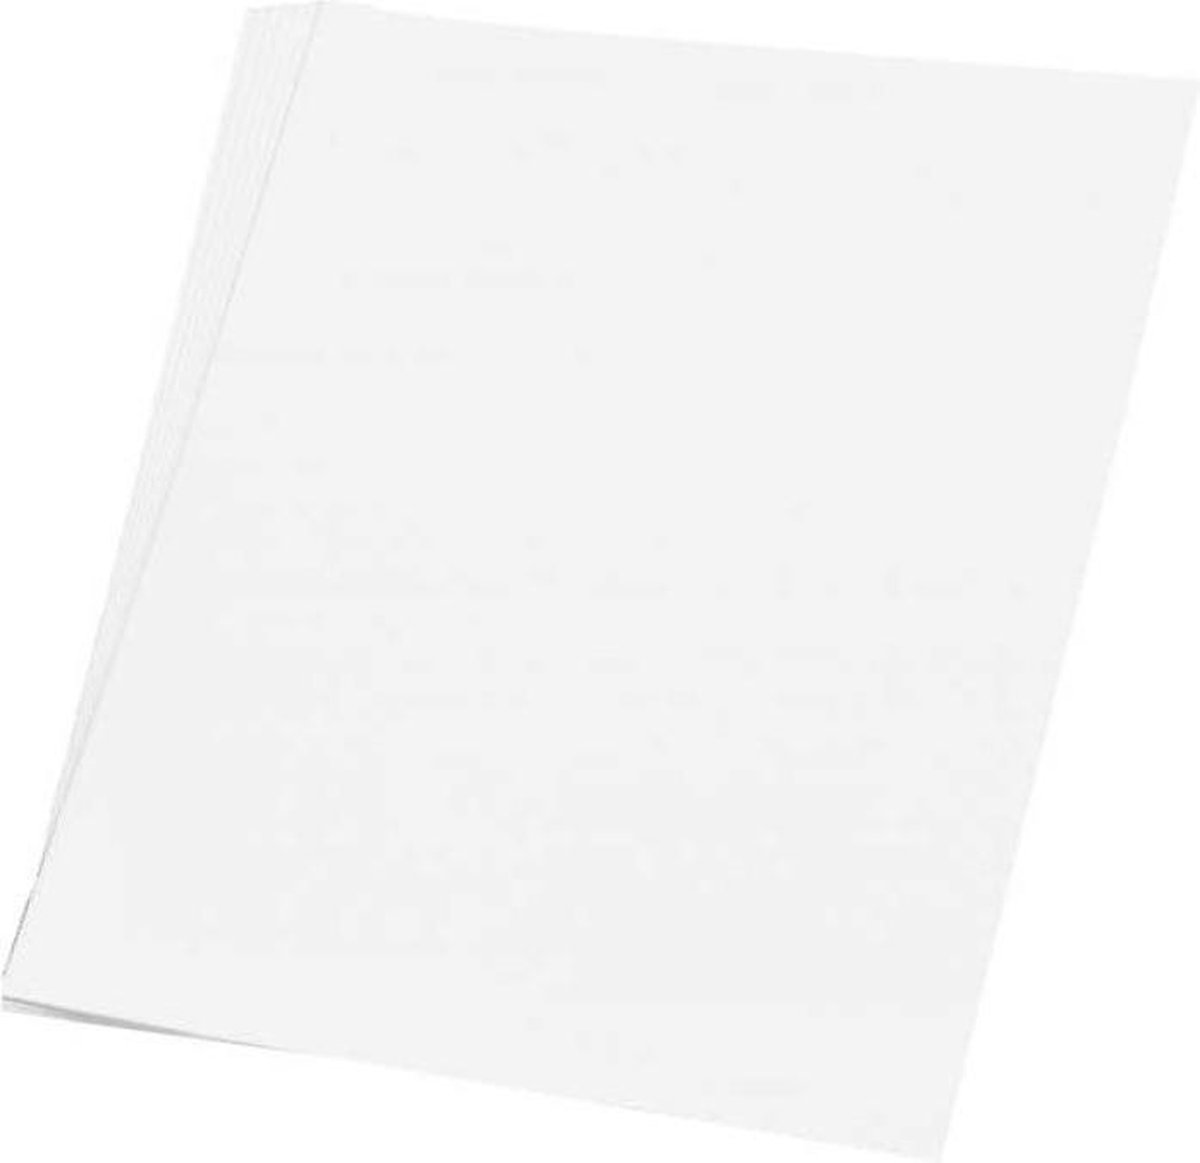 50 vellen wit A4 hobby papier - Hobbymateriaal - Knutselen met papier - Knutselpapier - Haza